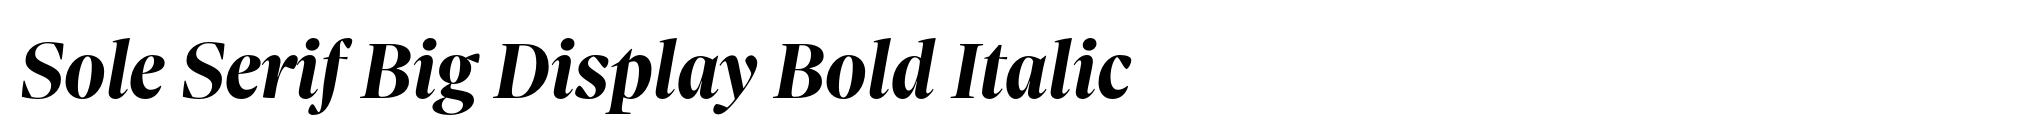 Sole Serif Big Display Bold Italic image